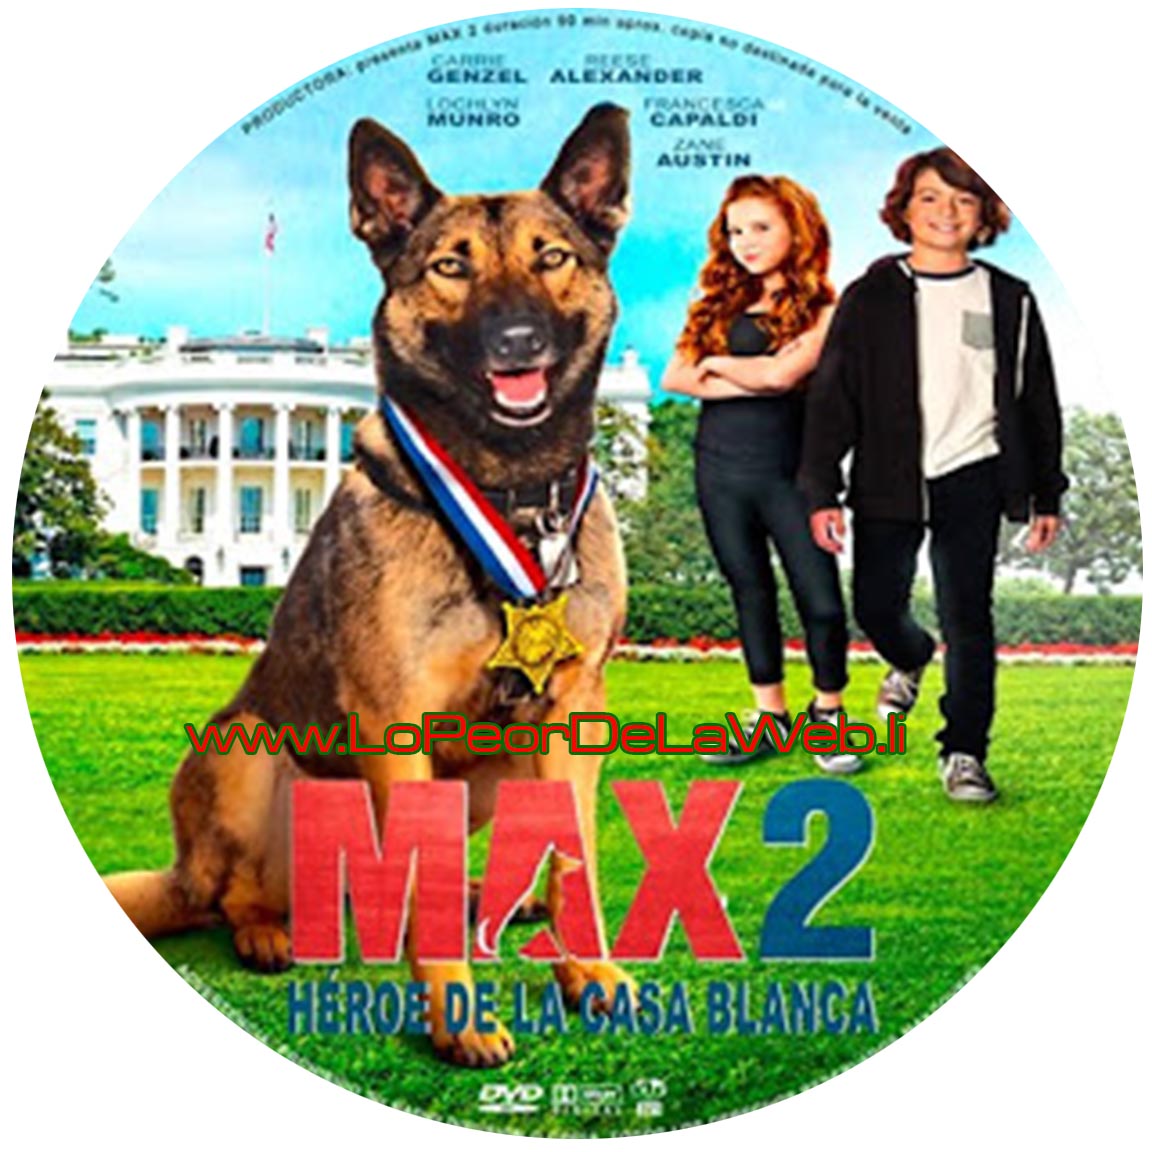 Max 2 (2017 - Latino / Inglés / Subtitulada / 1080 p)